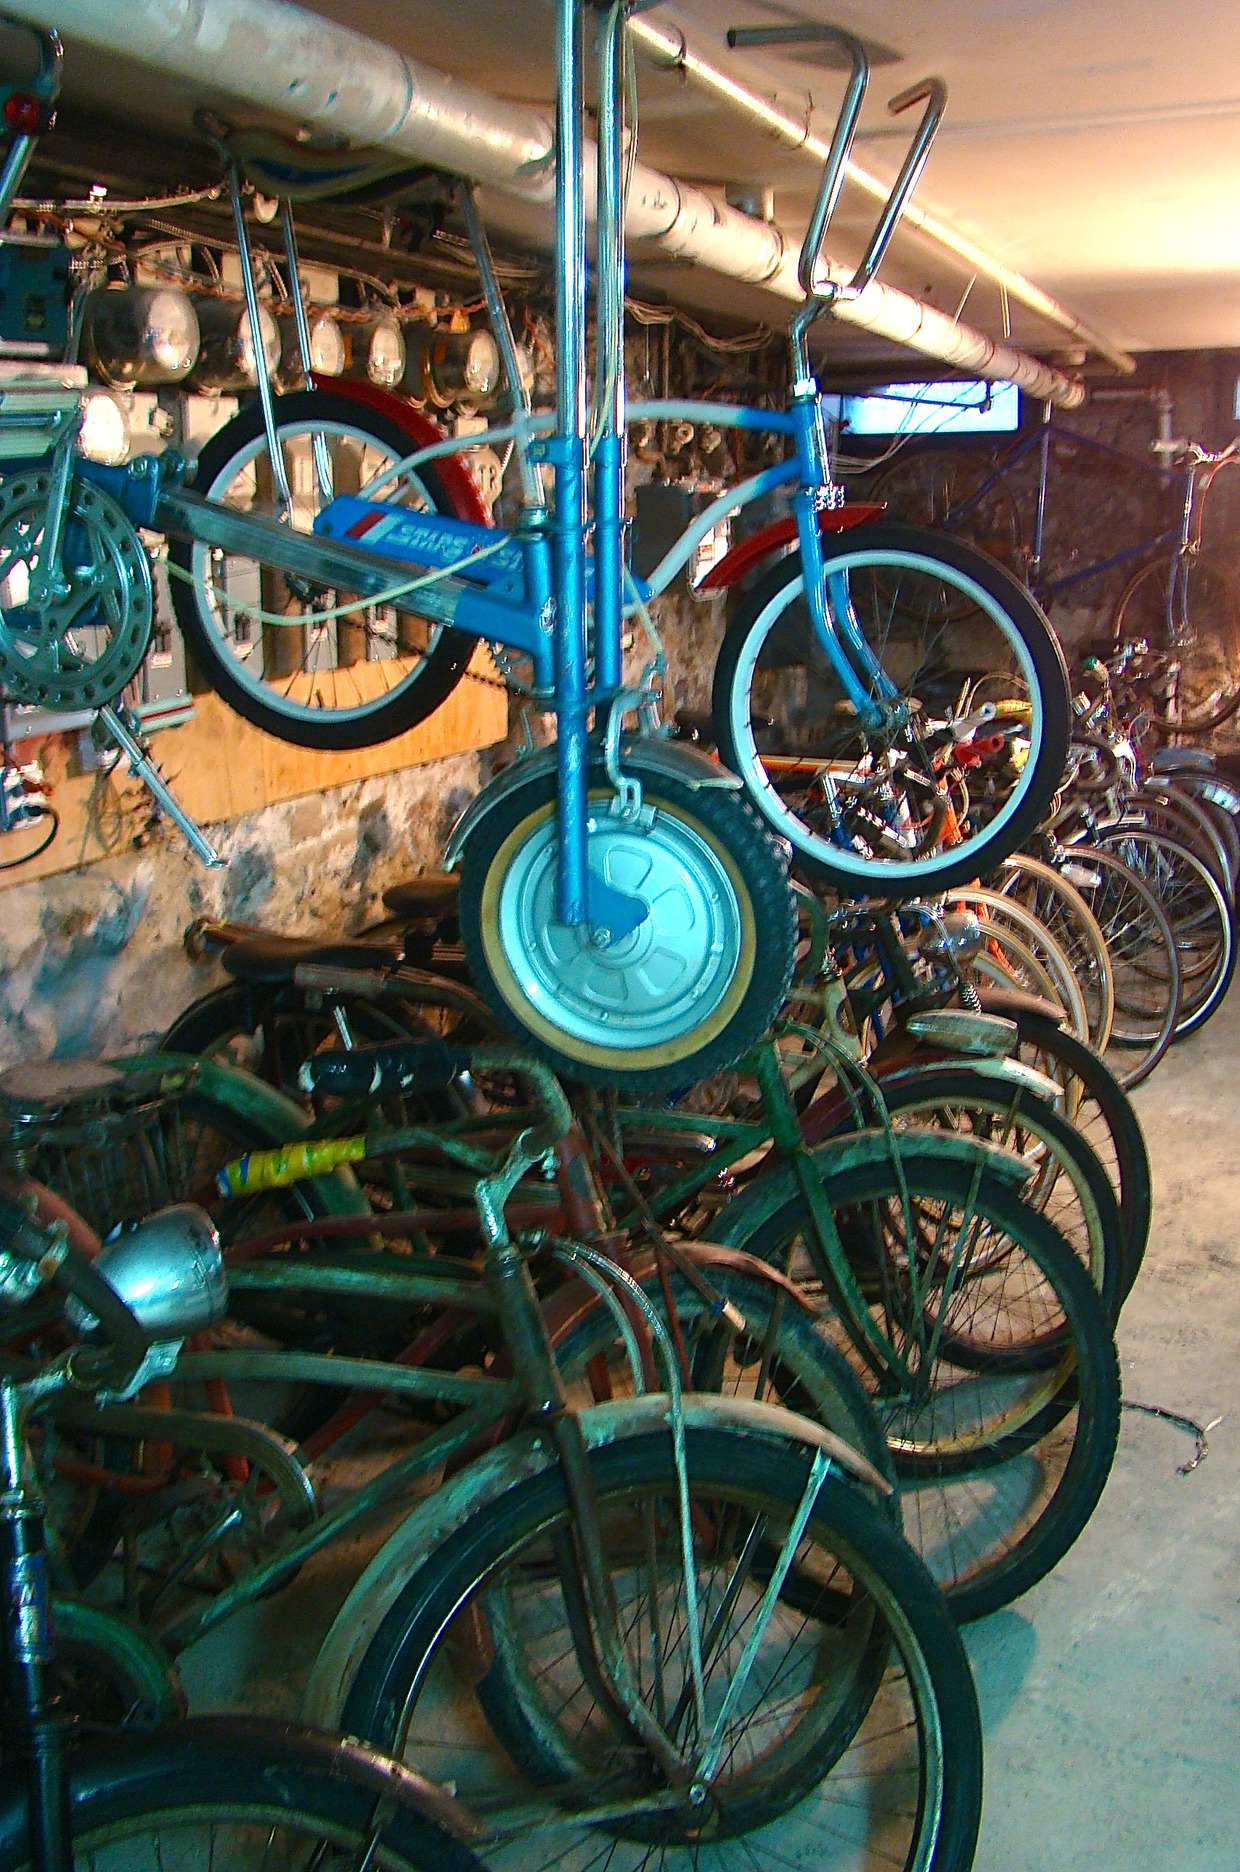 Vintage Bicycle Studio Opens in Bushwick Basement